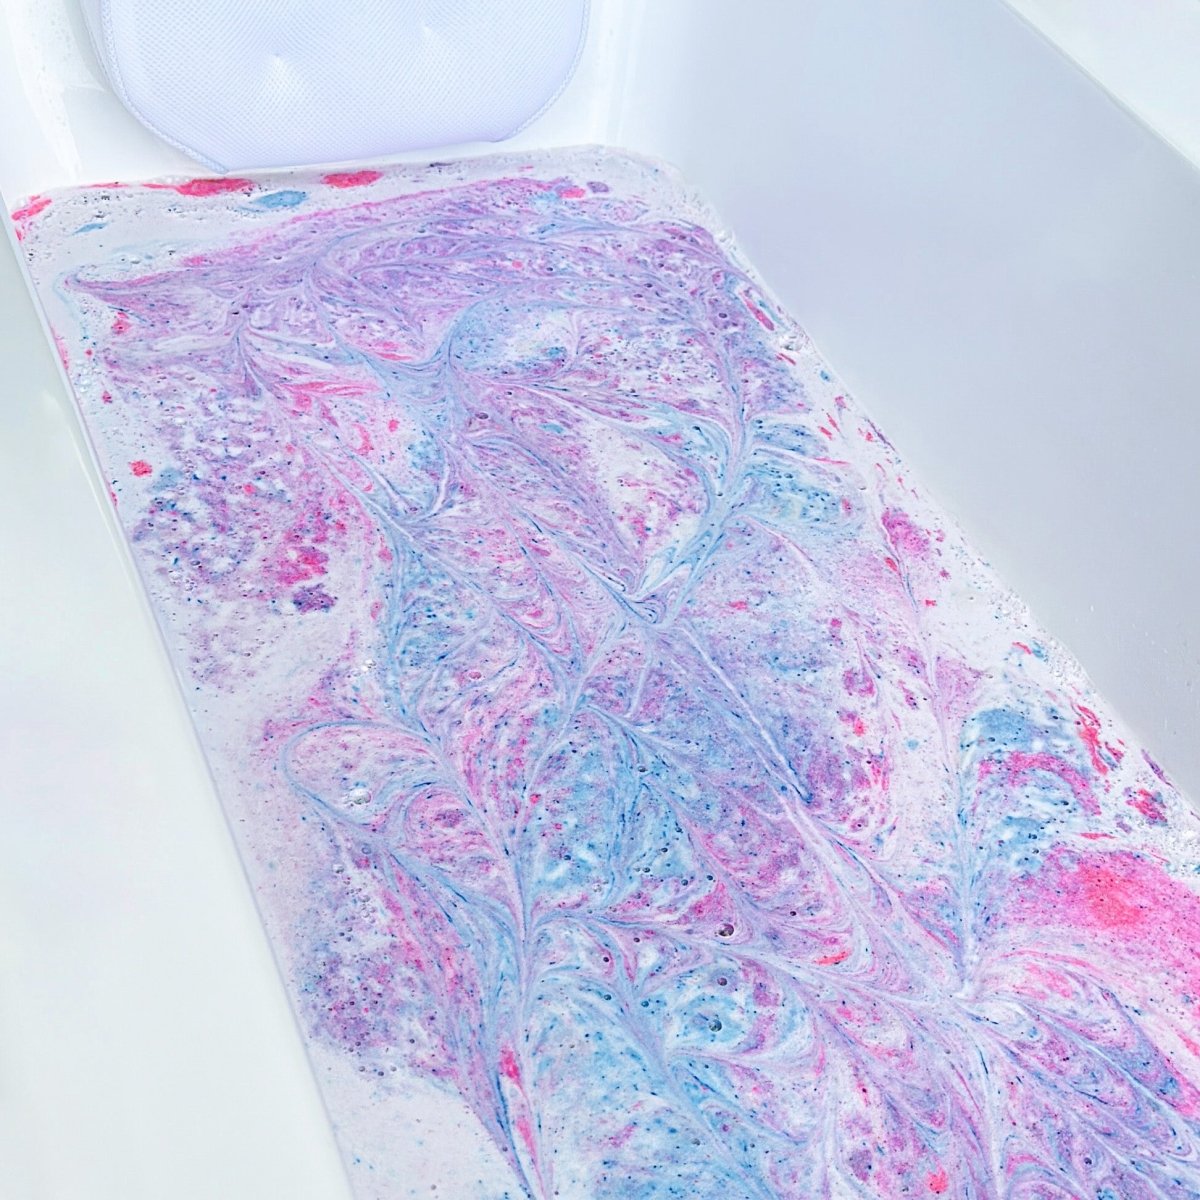 Confetti Bath Dust for Kids & Adults - Colourful Glitters & Birthday Cake Fragrance - Made in Australia by Bath Box